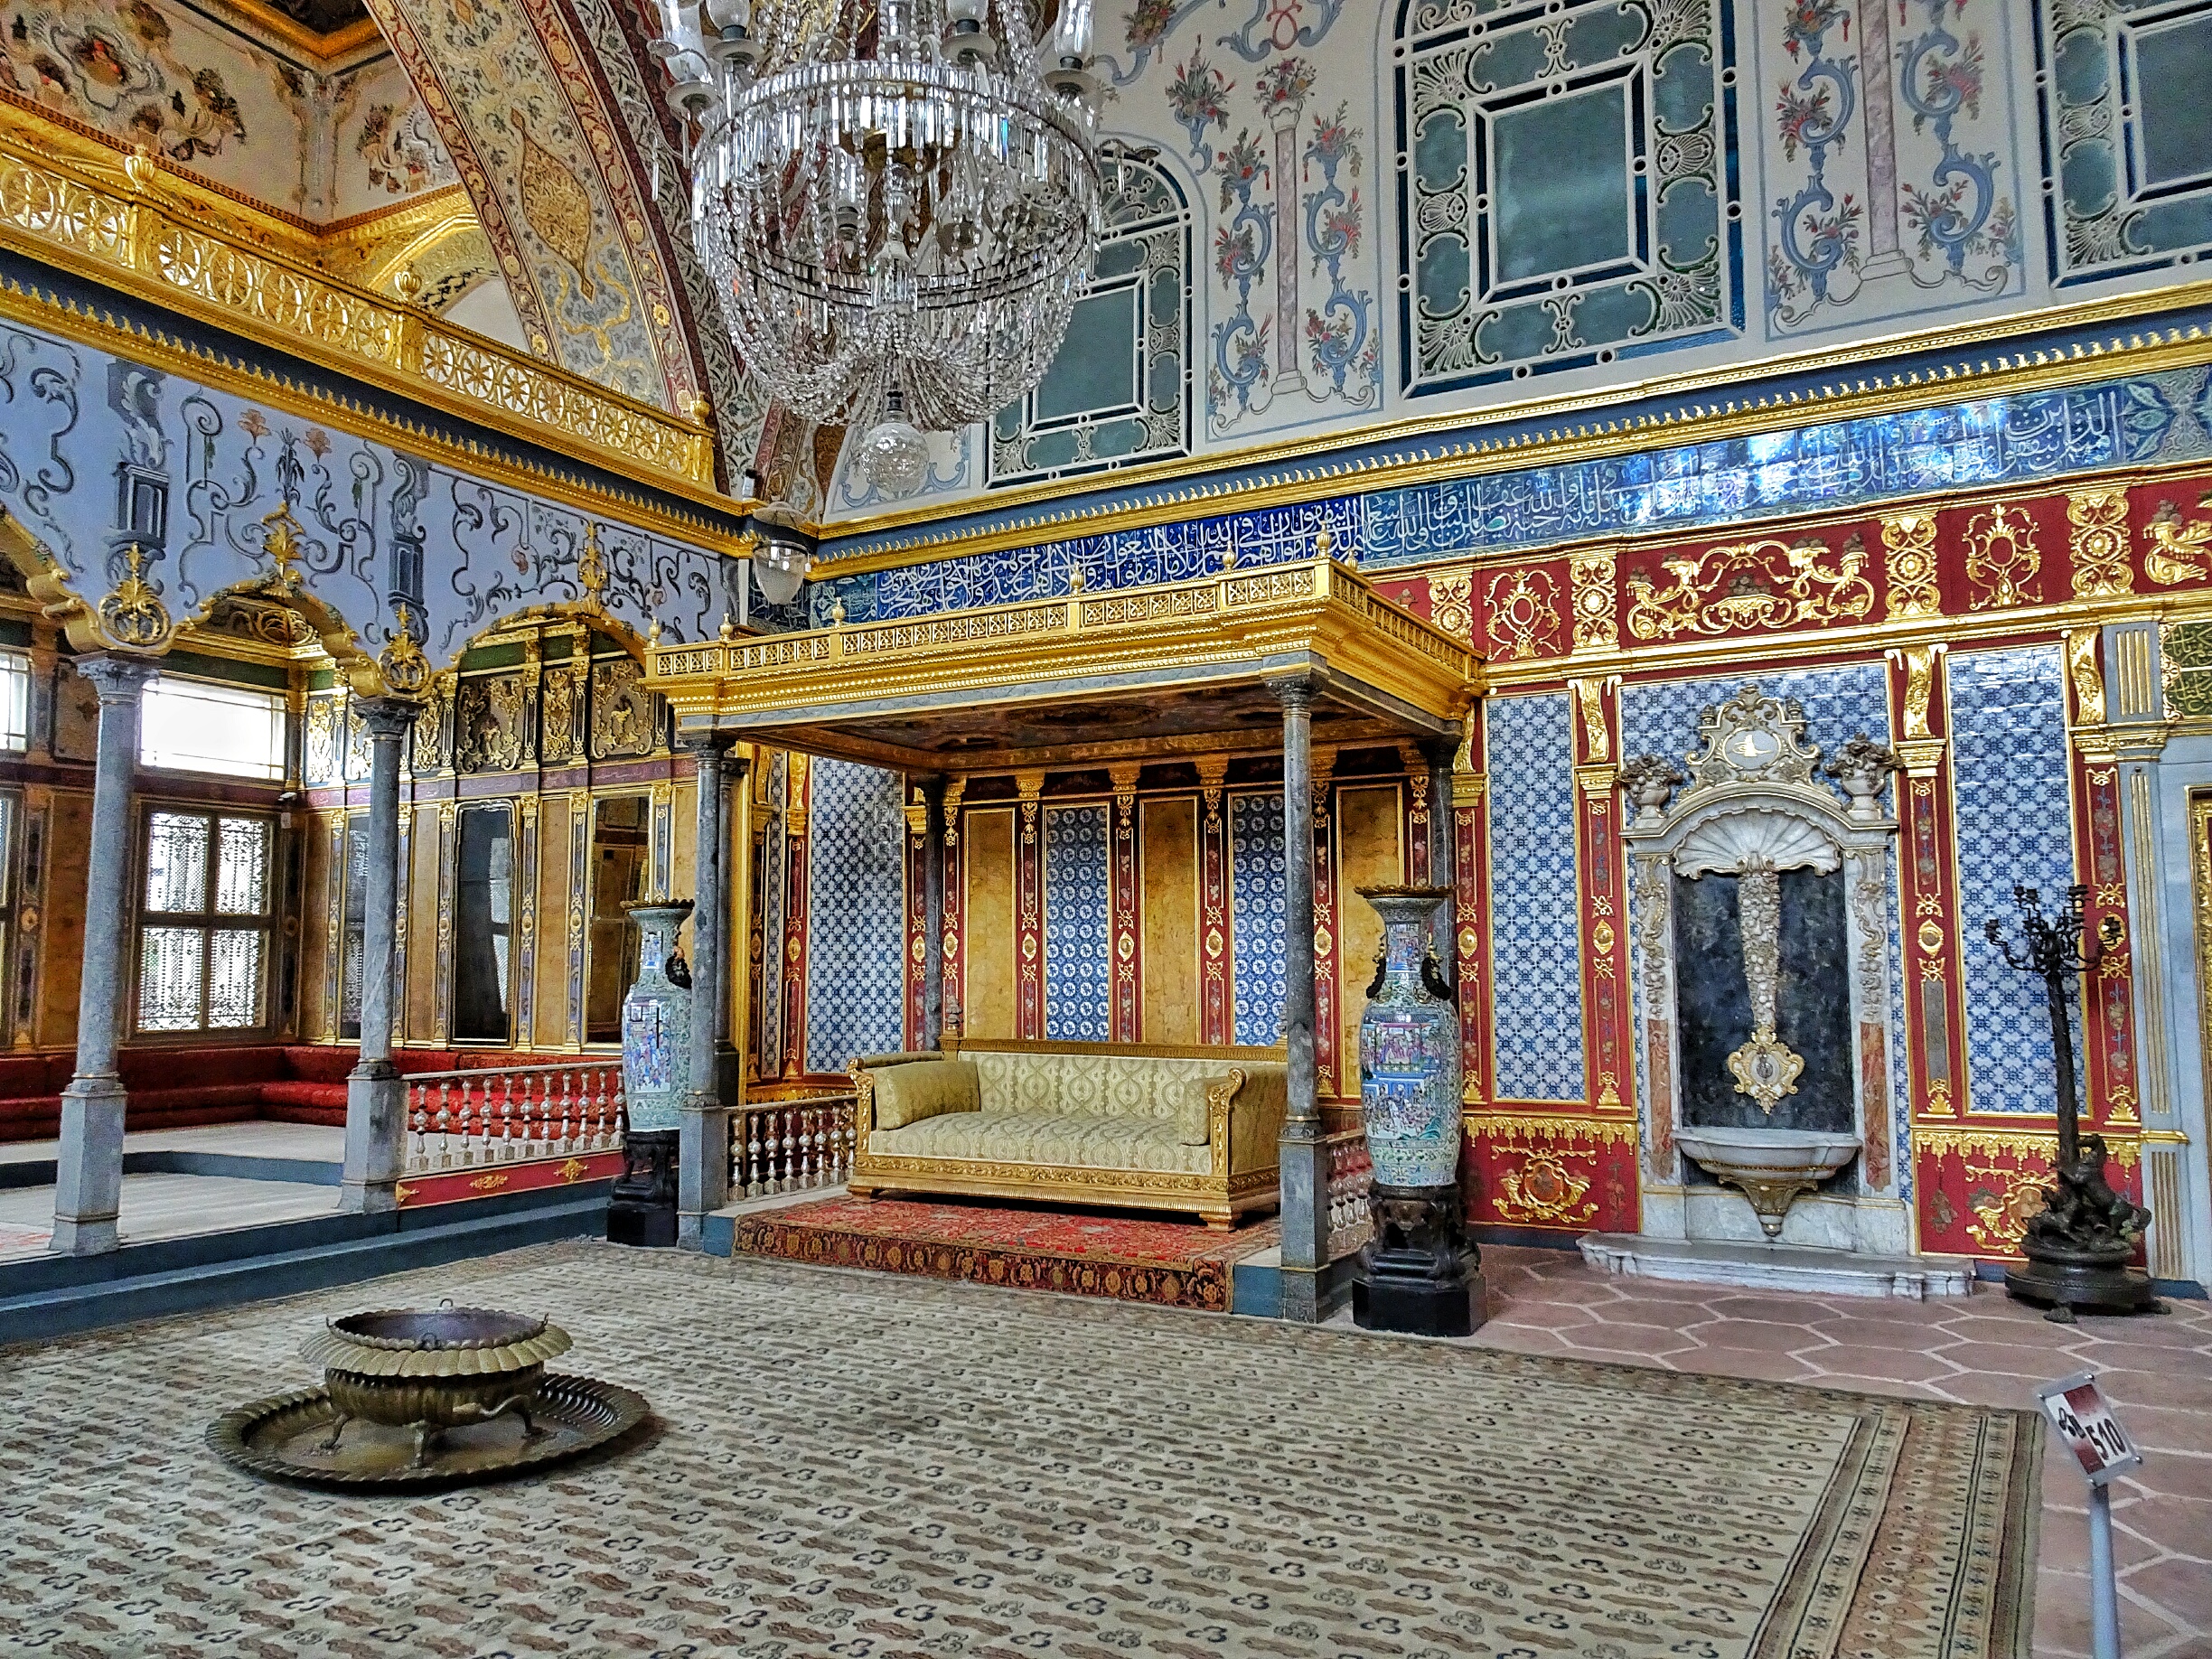 Topkapi Palace
